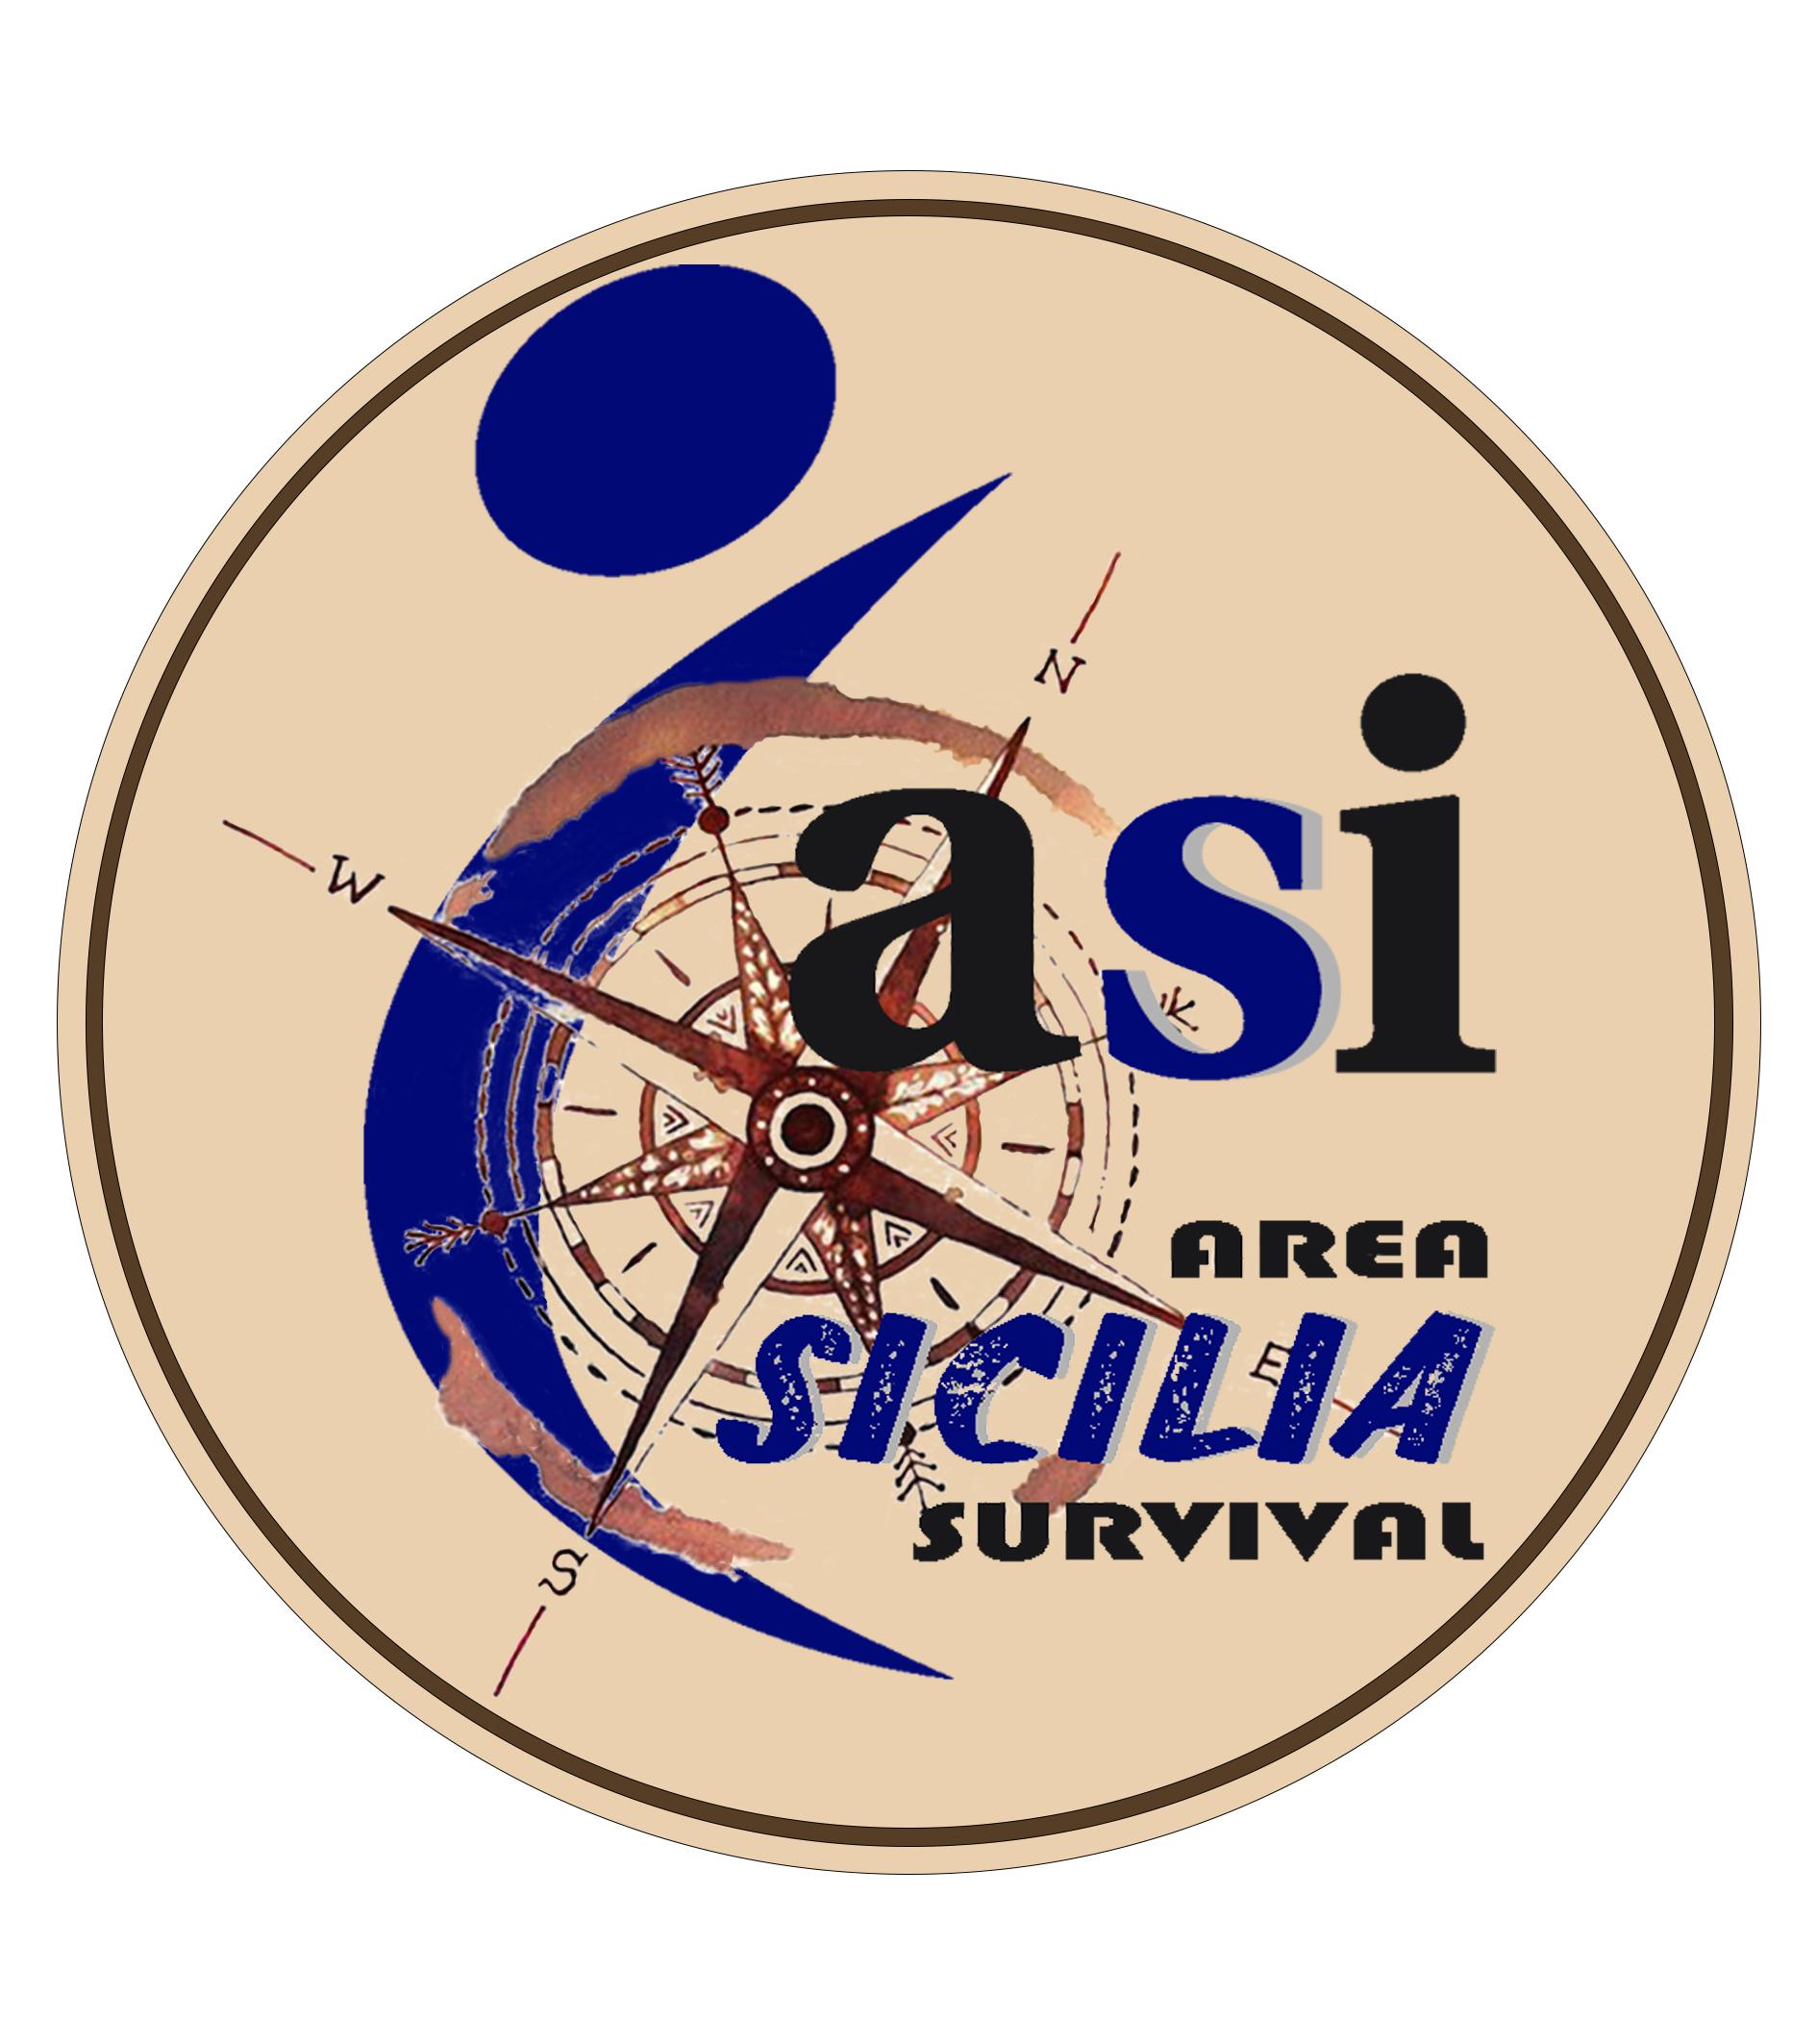 Asi Sicilia - Orienteering/Survival